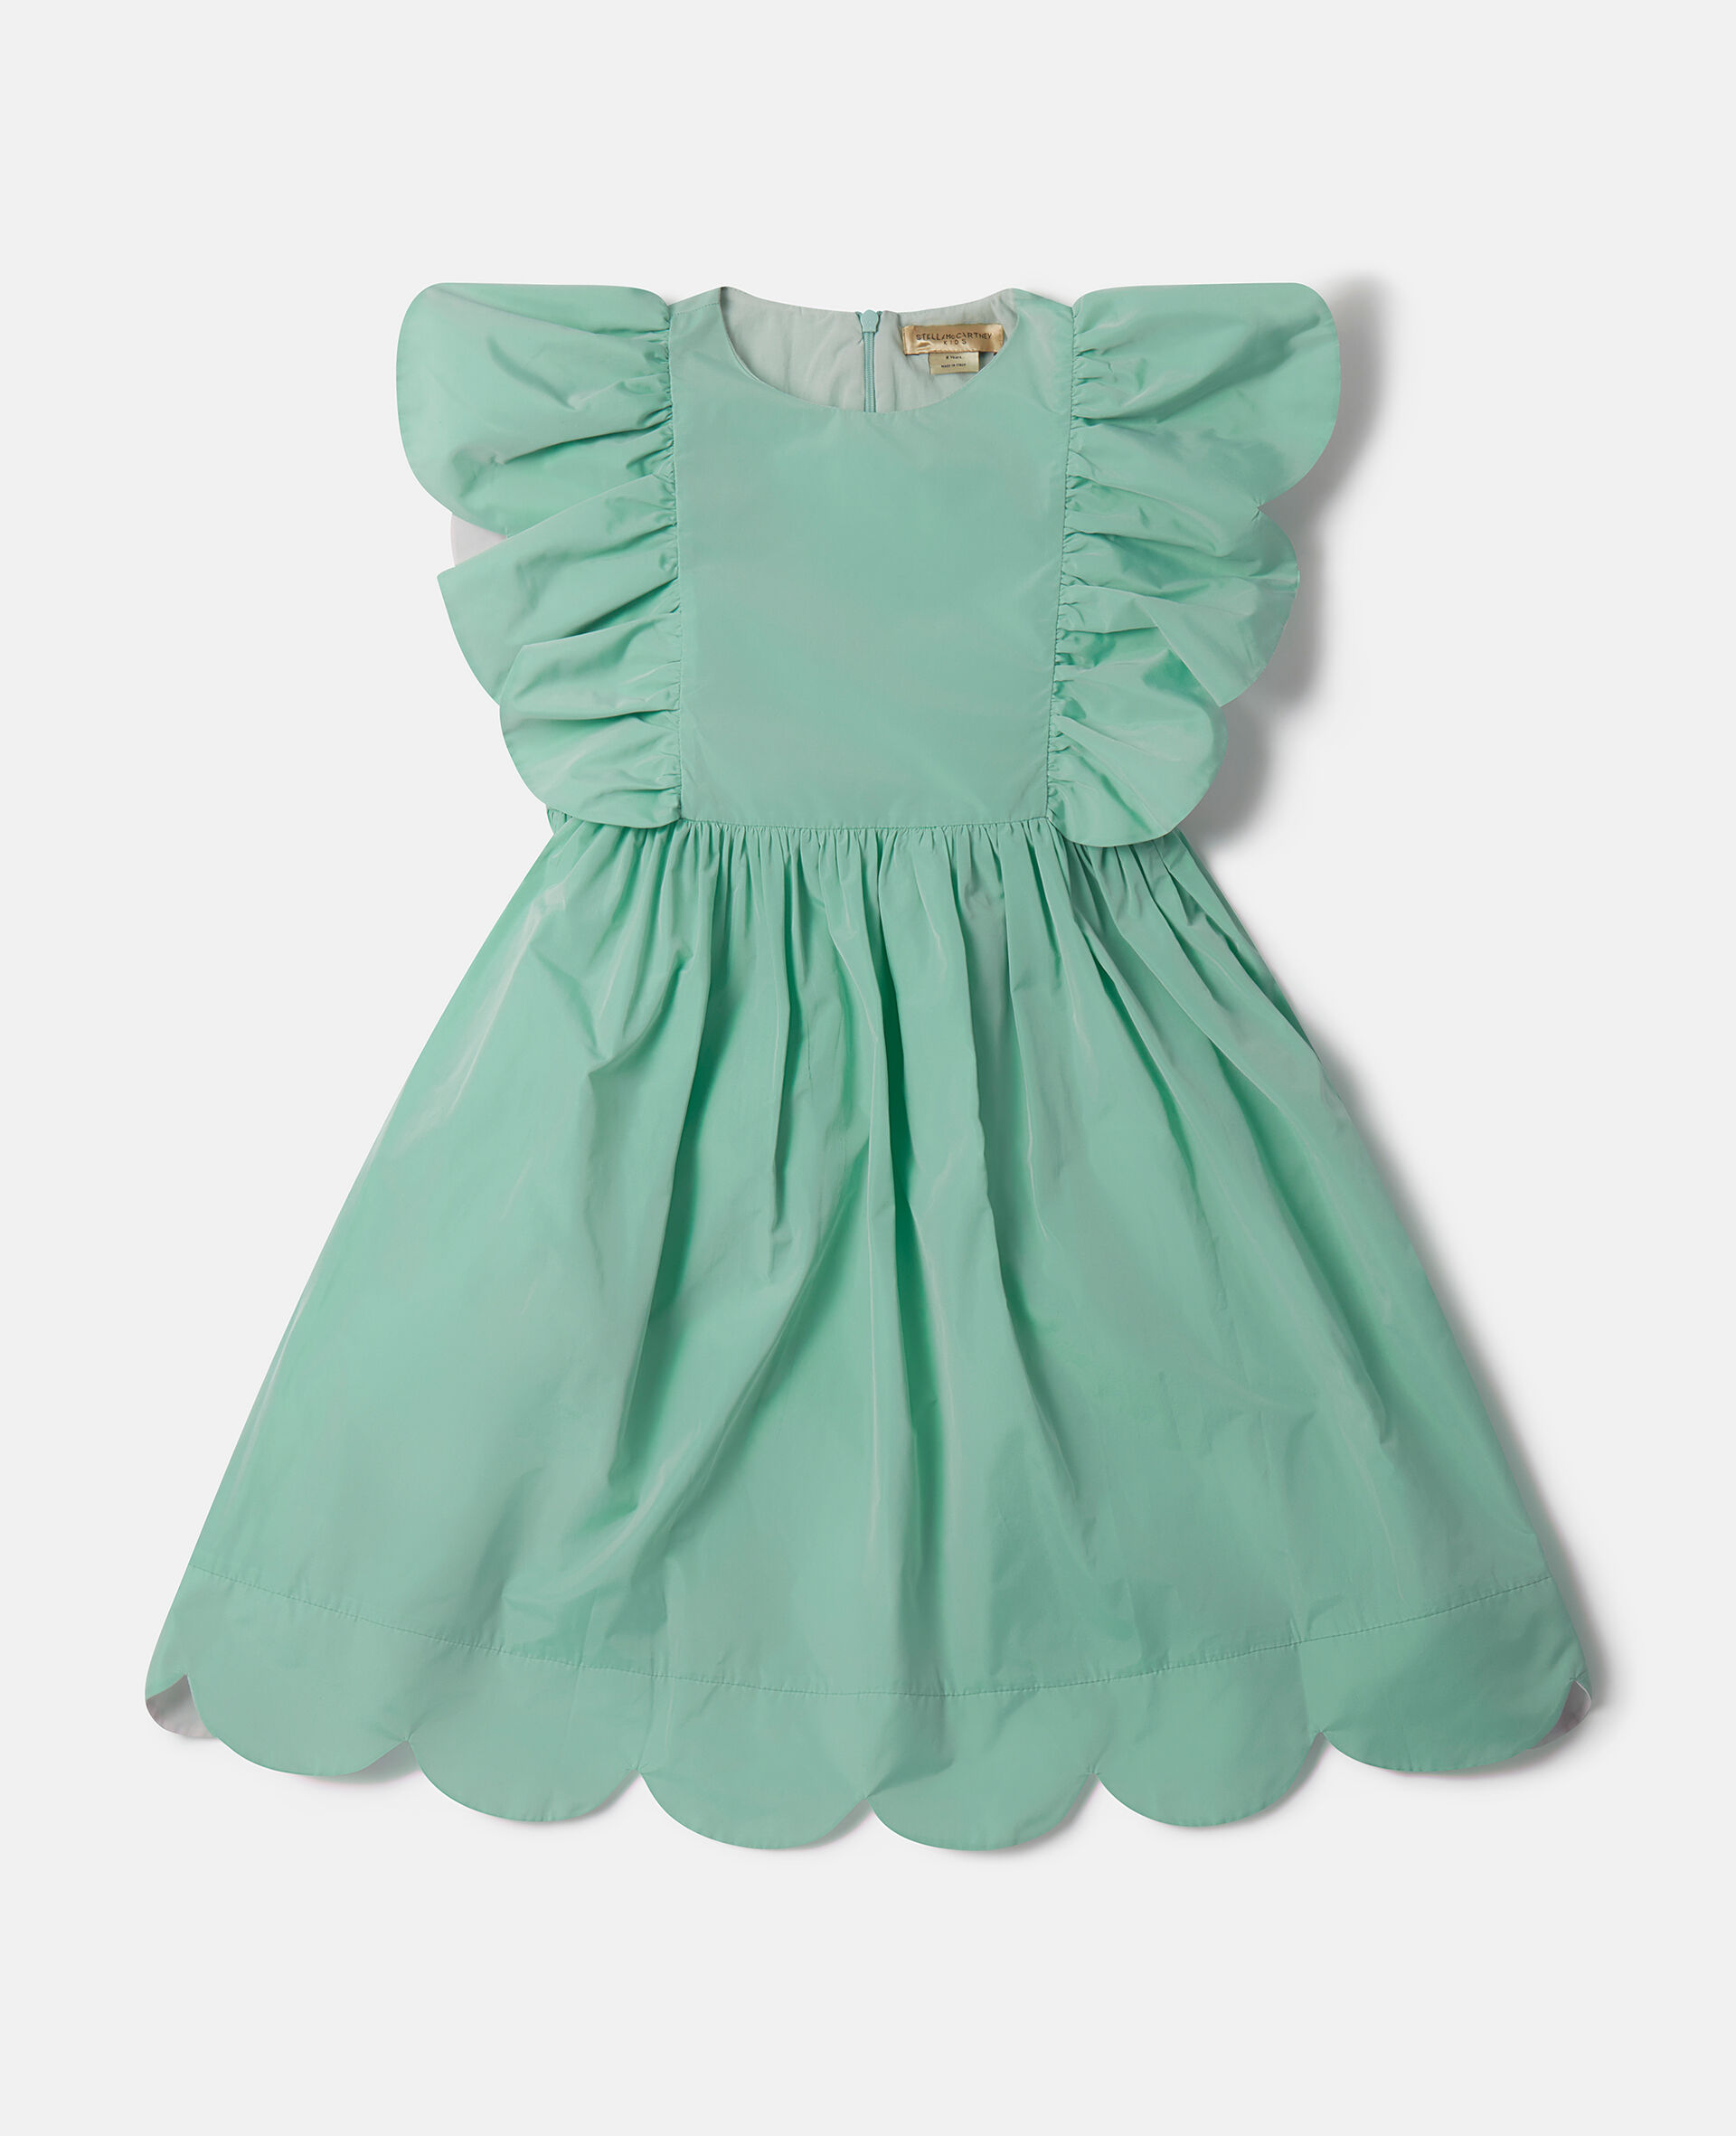 Scalloped Edge Sleeveless Dress-Green-large image number 0